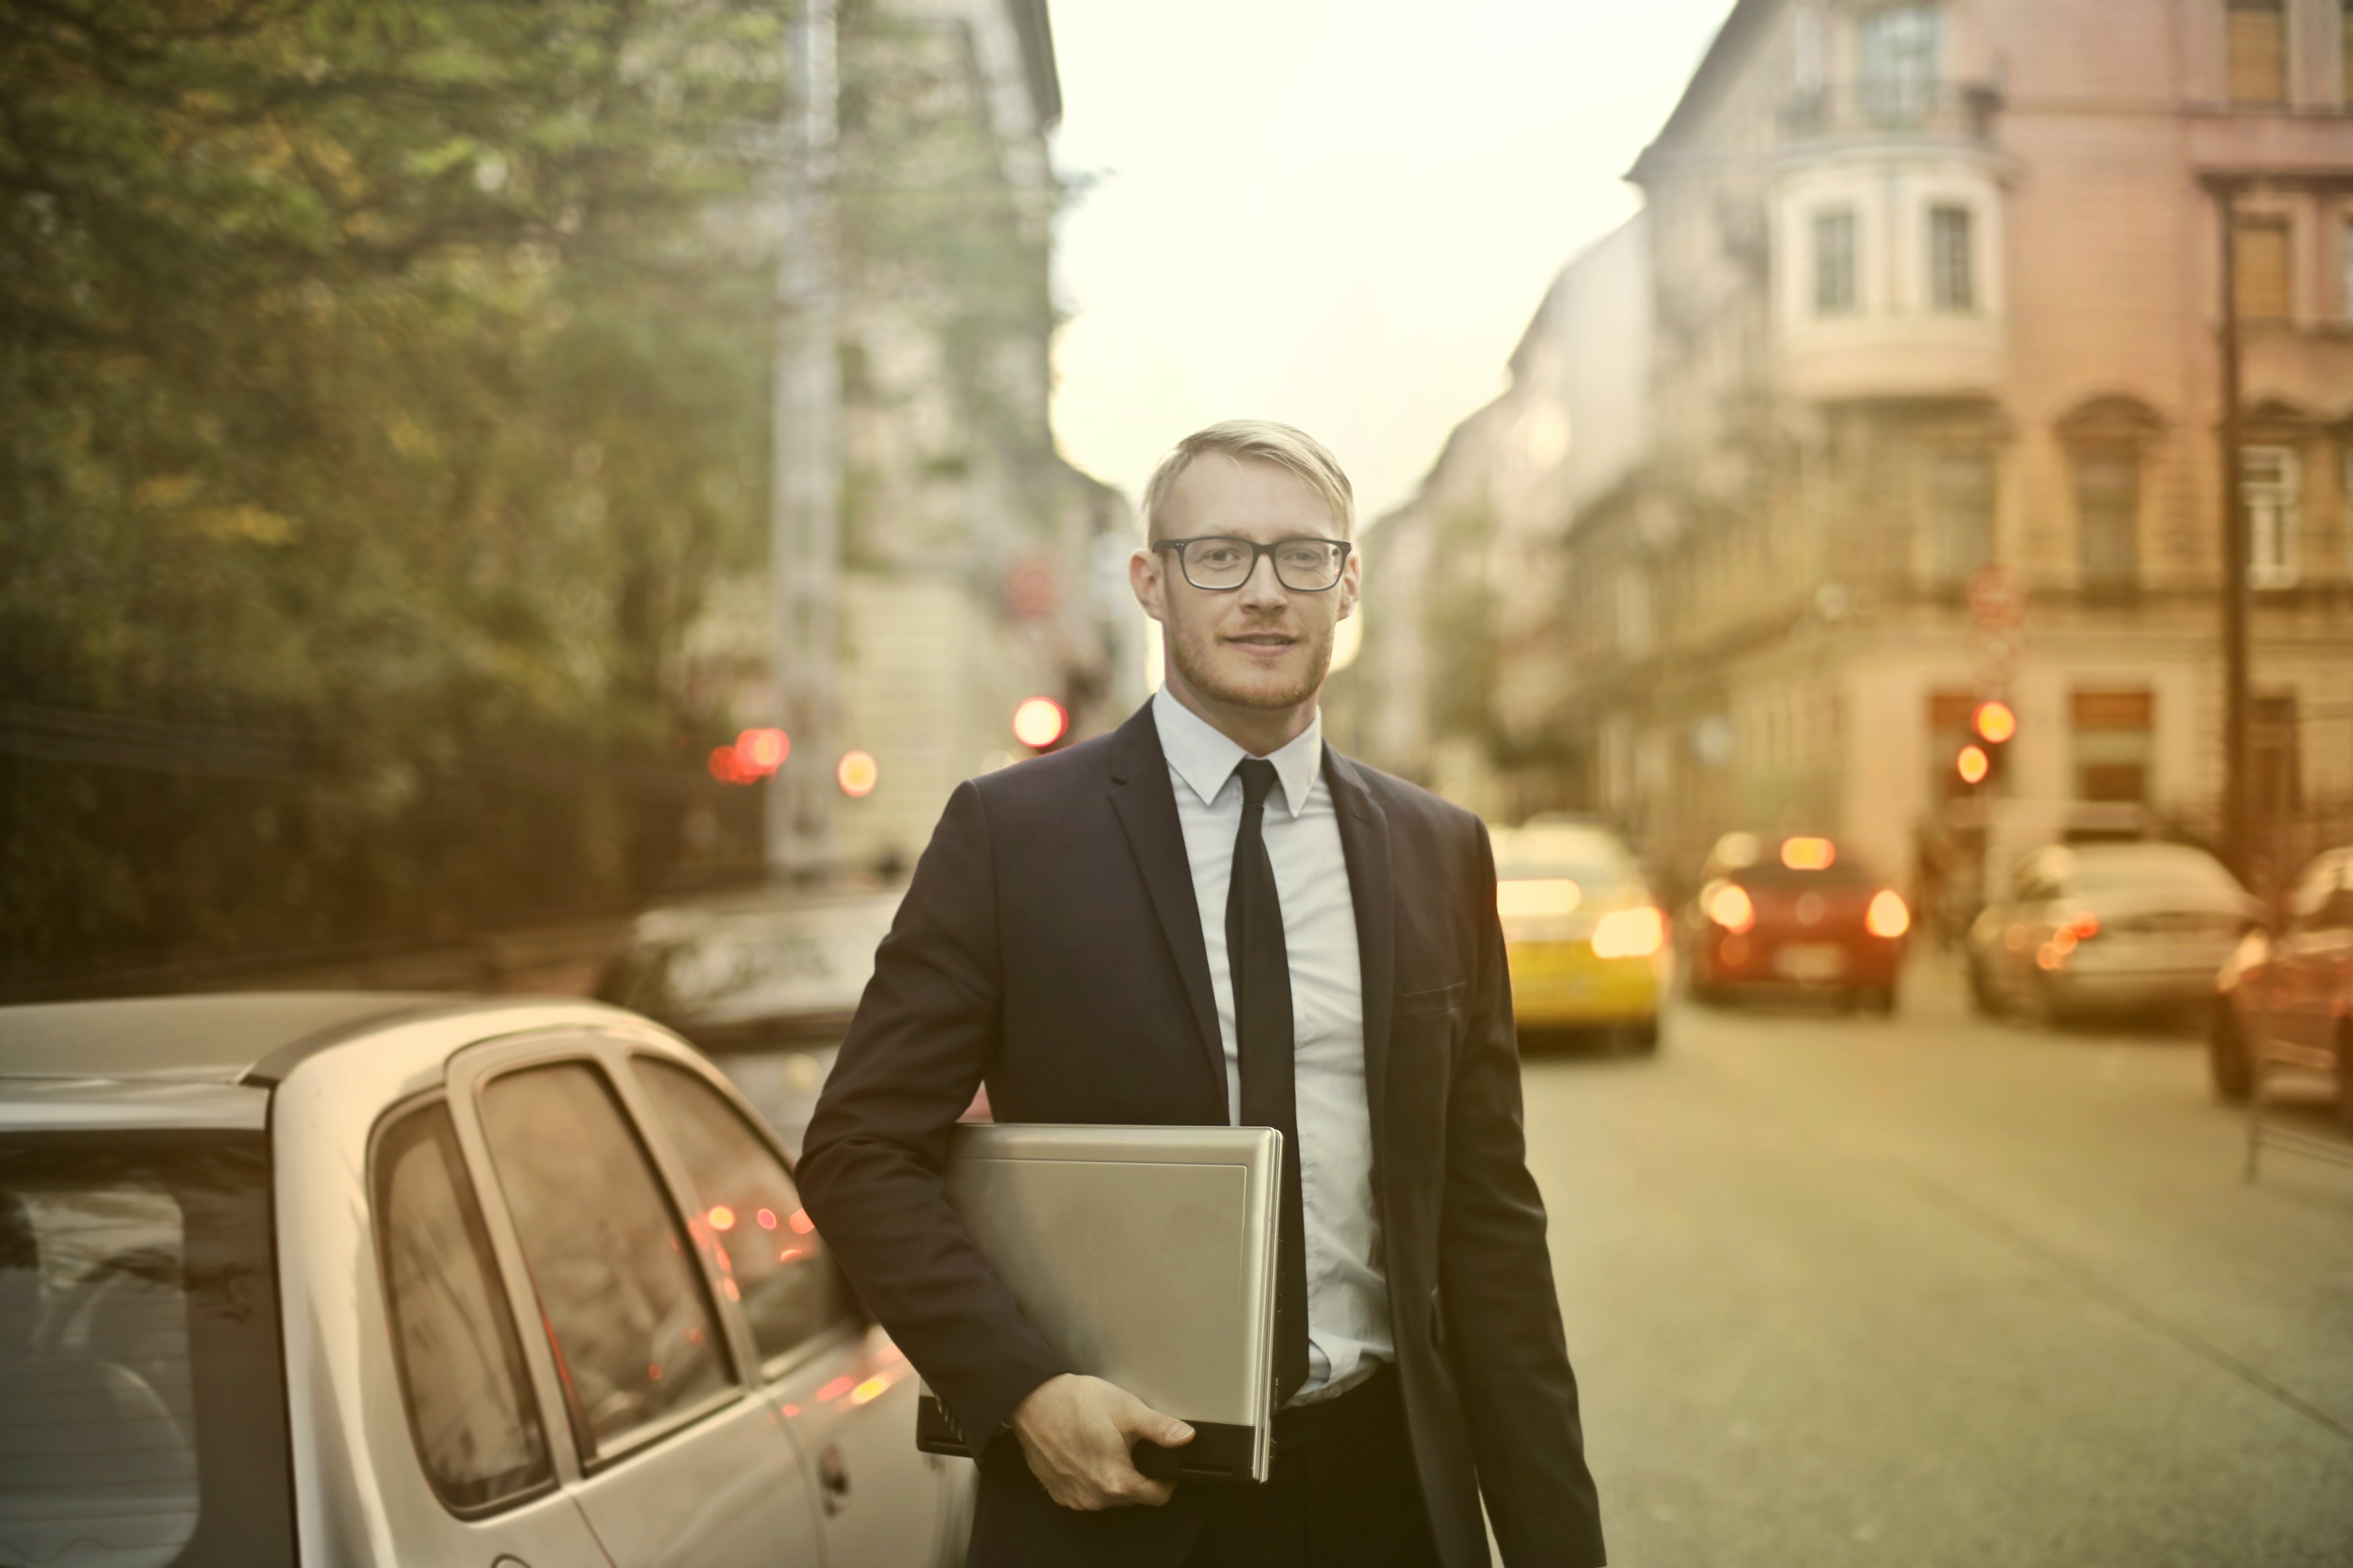 Car Salesman On The Street With A Portfolio 